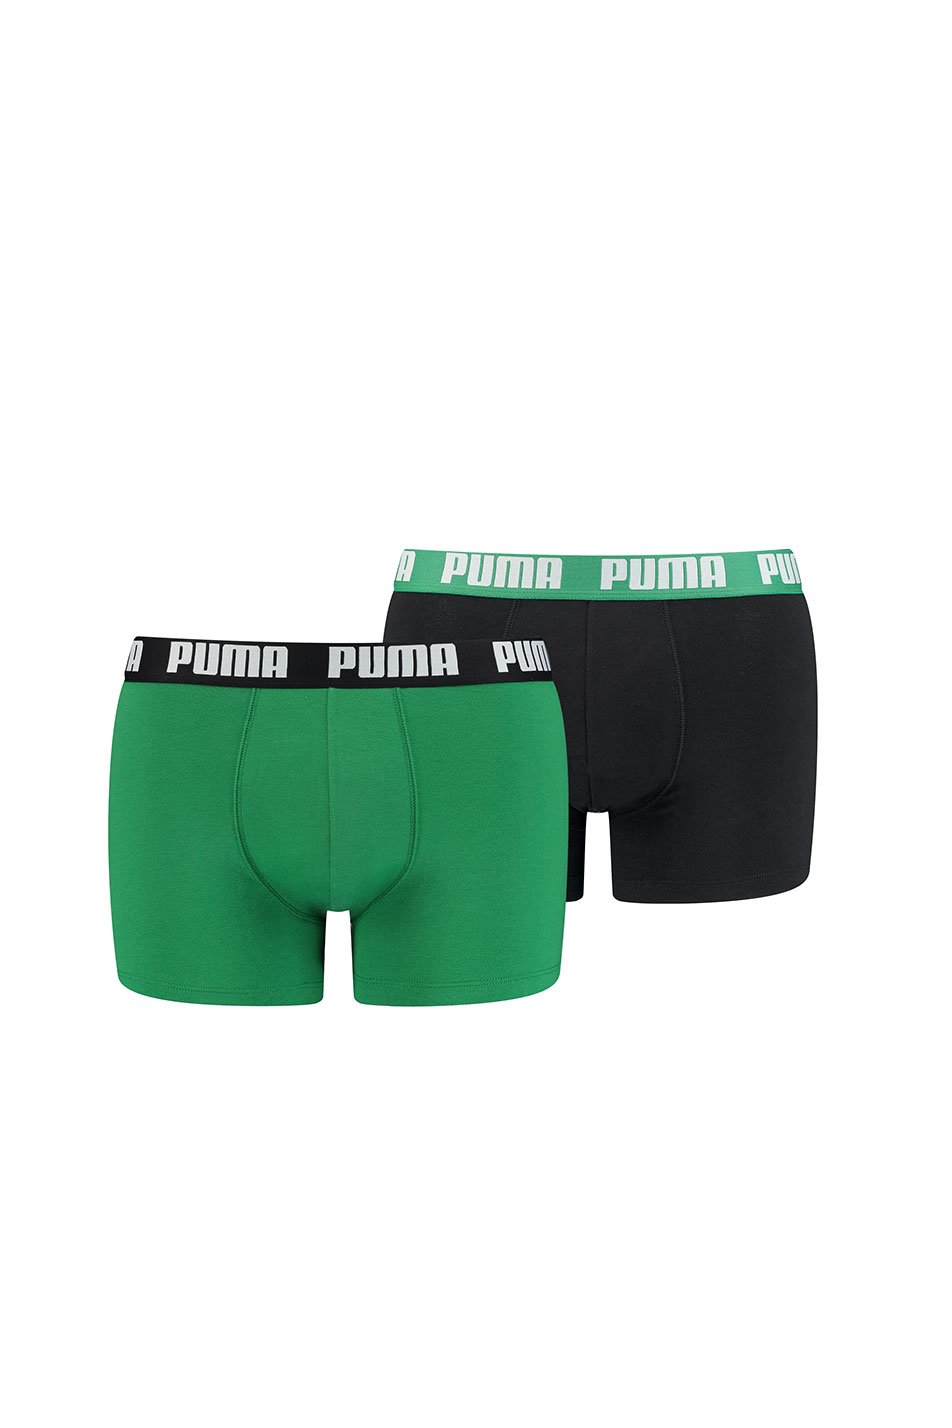 Puma Basic Men's Boxer 2 Pack